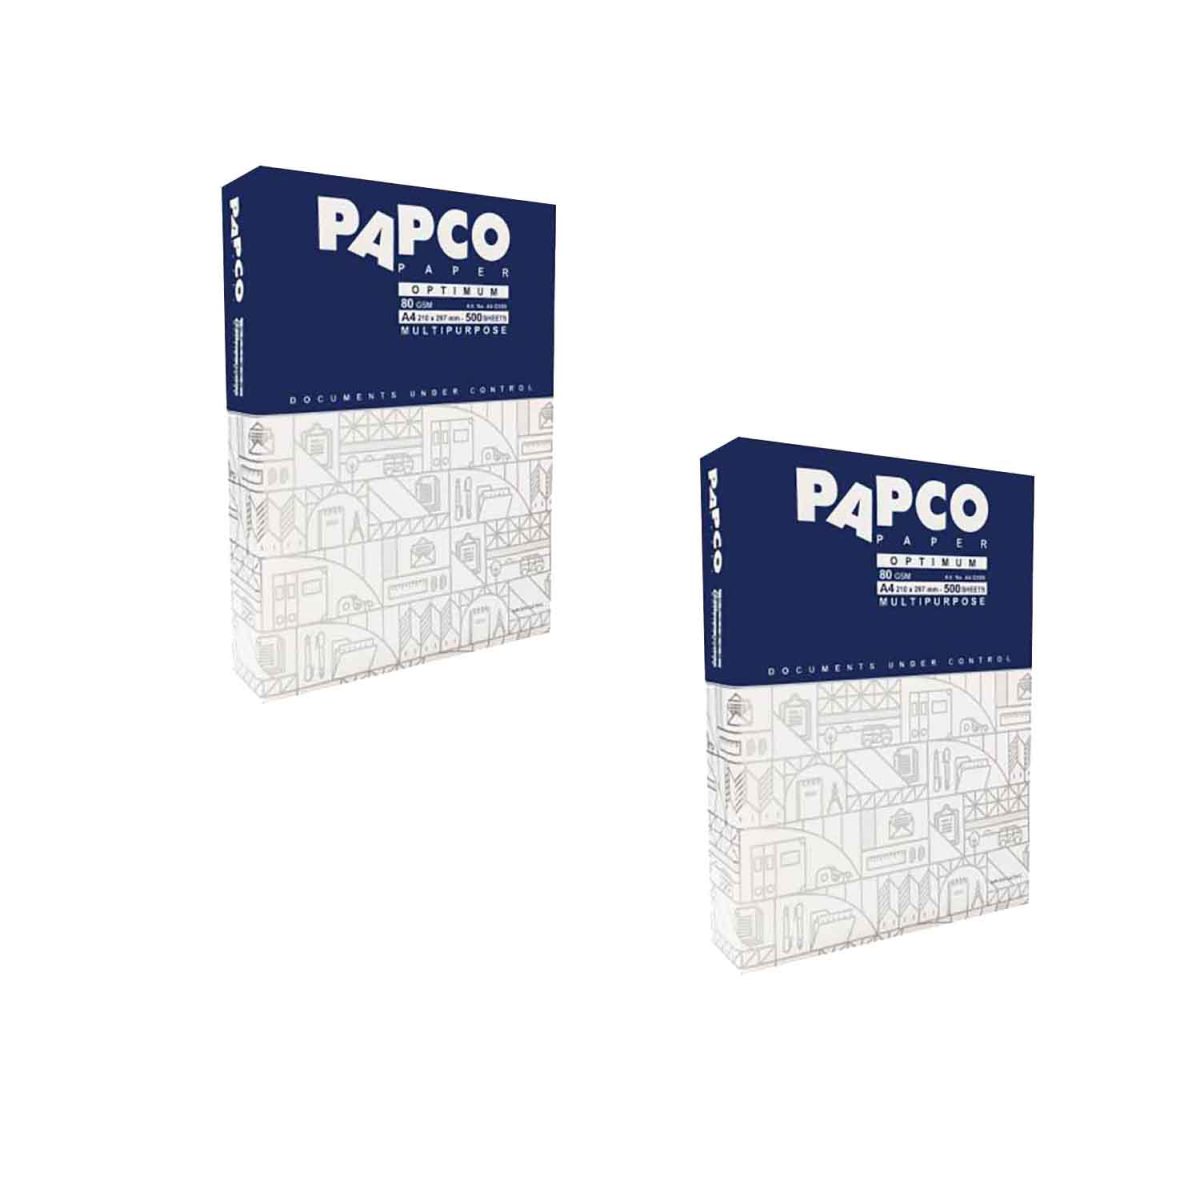 کاغذ A4 پاپکو مدل اپتیموم کد DR110 بسته 1000 عددی